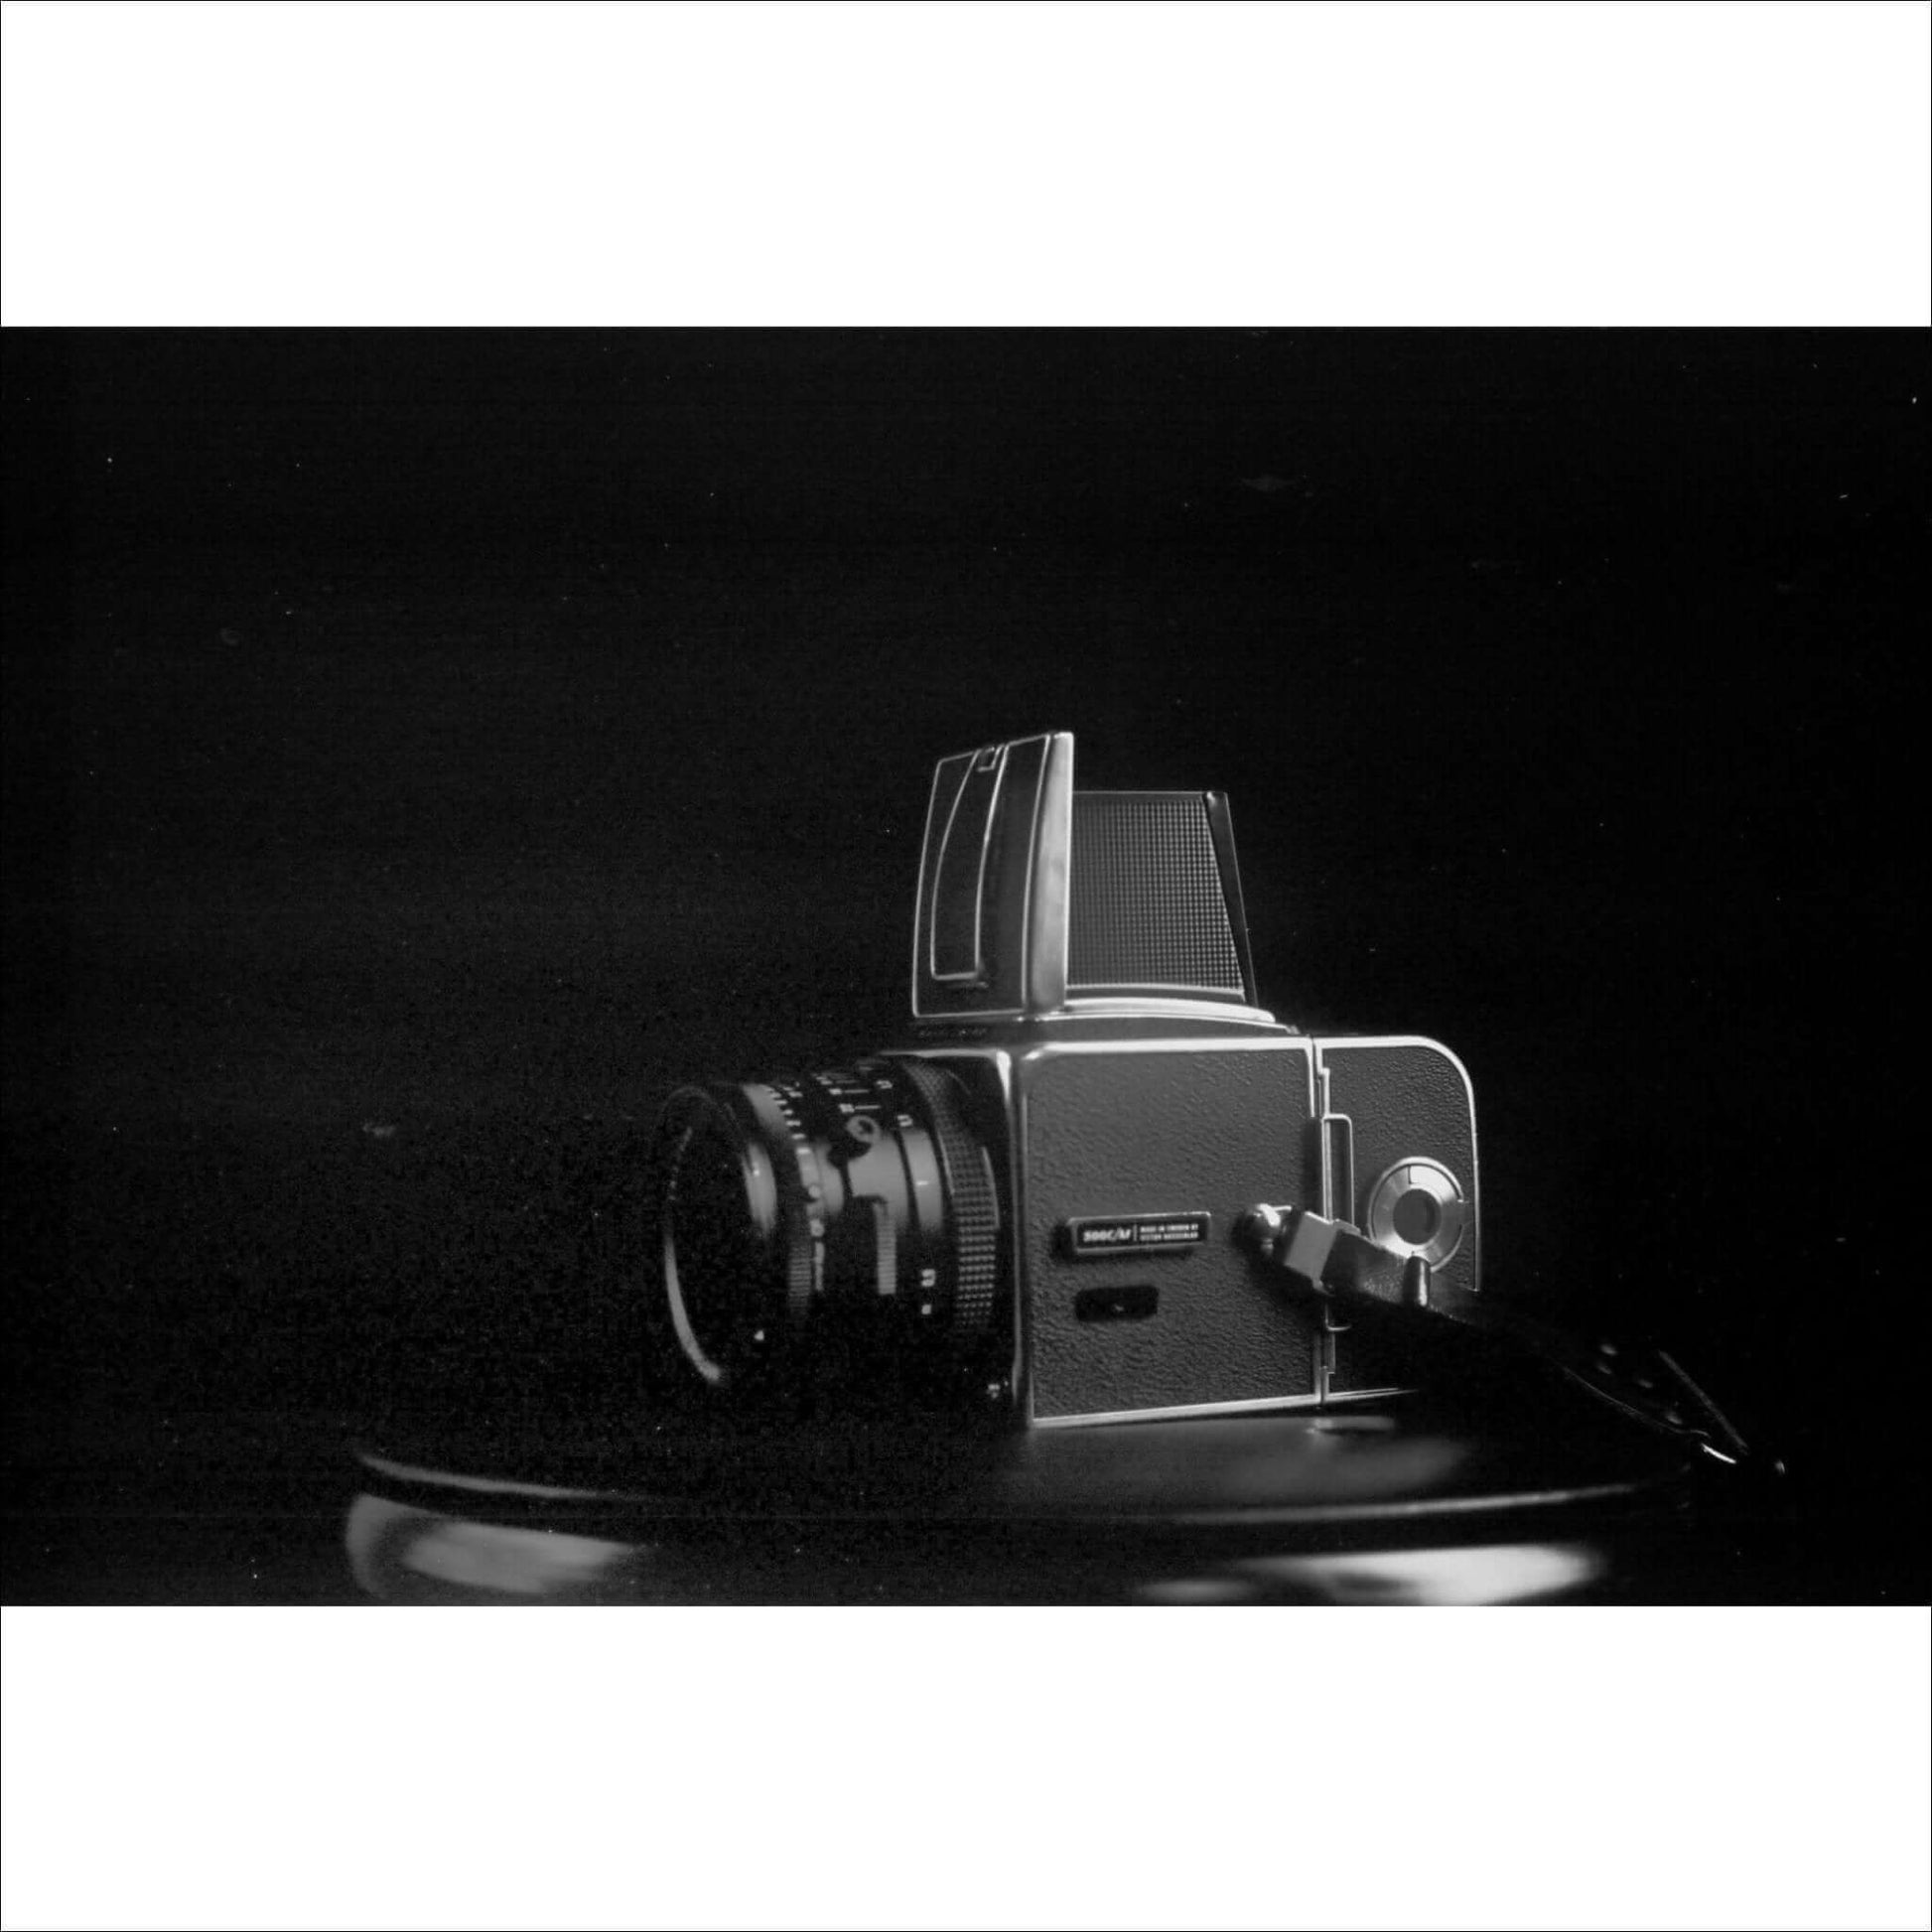 Ferrania P30 80 Iso Black And White 35mm 36 Exp Film